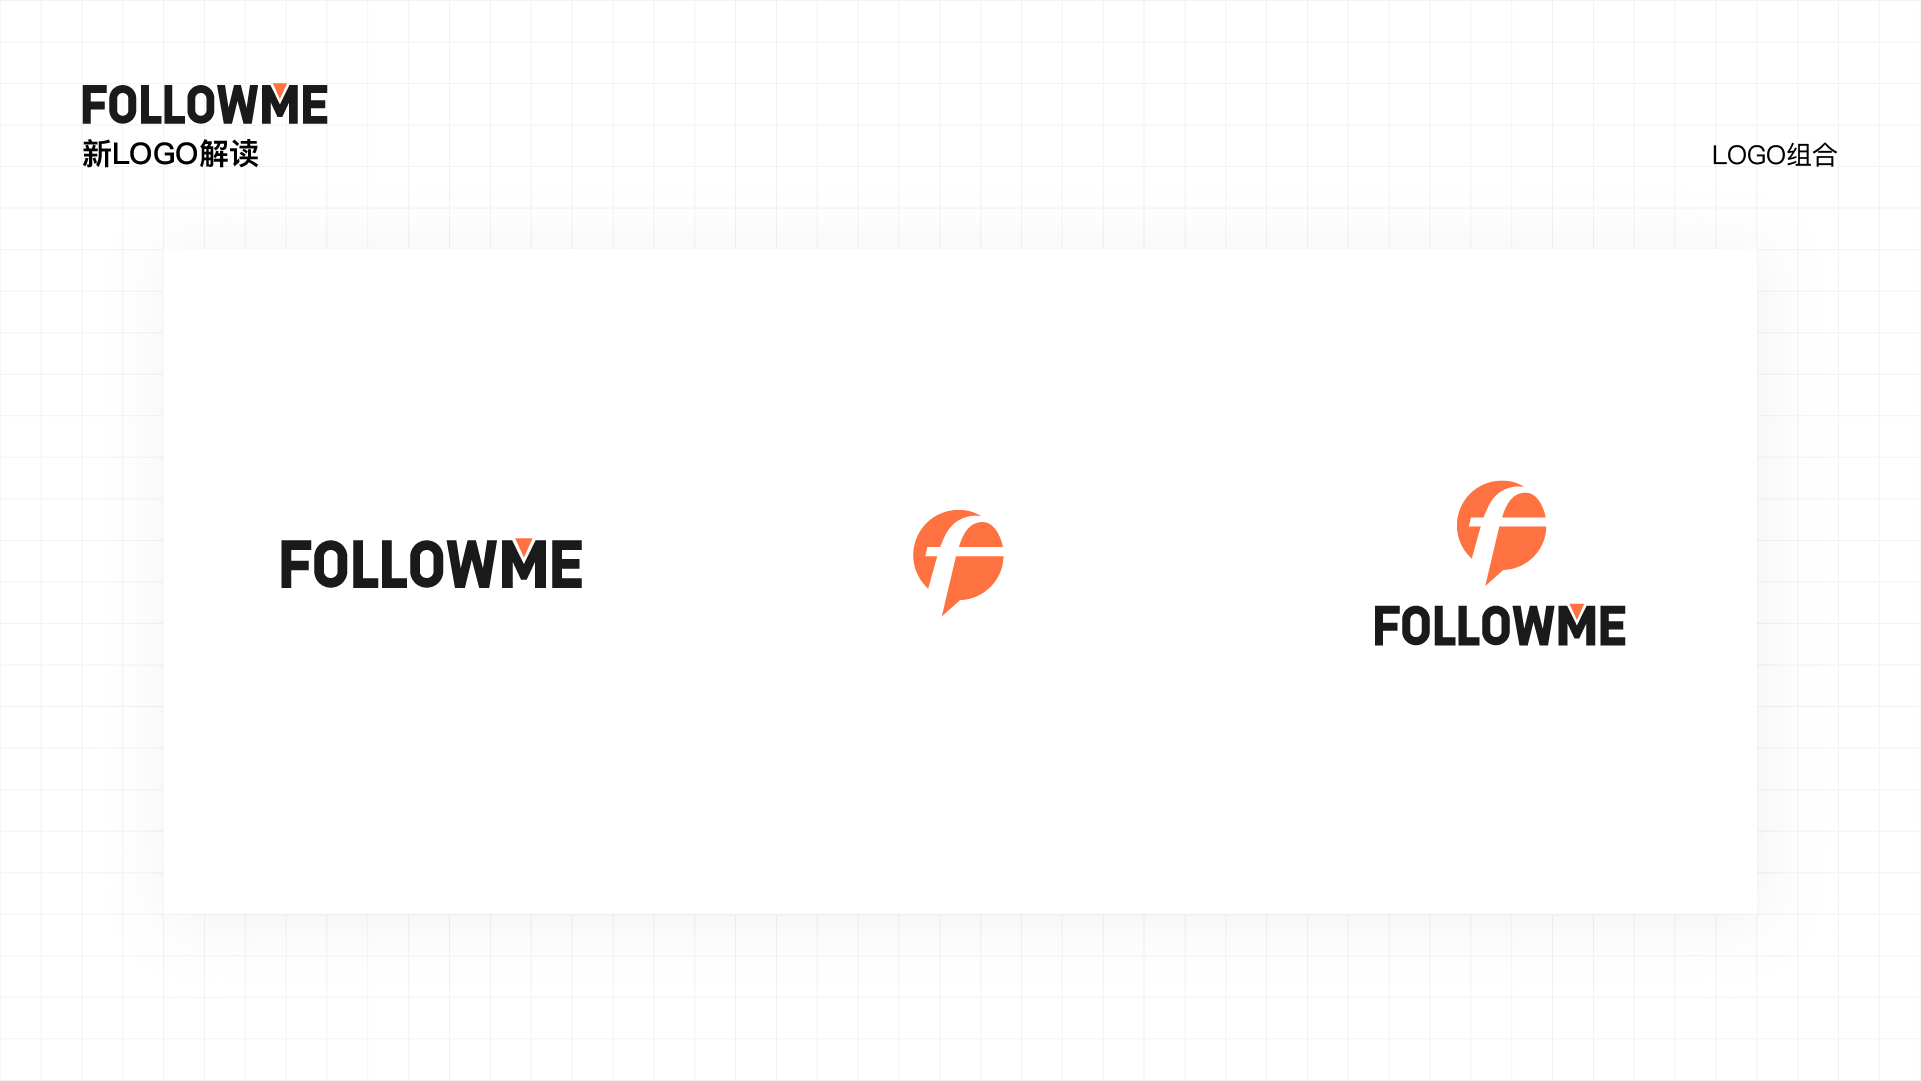 FOLLOWME 启动全球品牌形象升级，从新出发迎战全球化